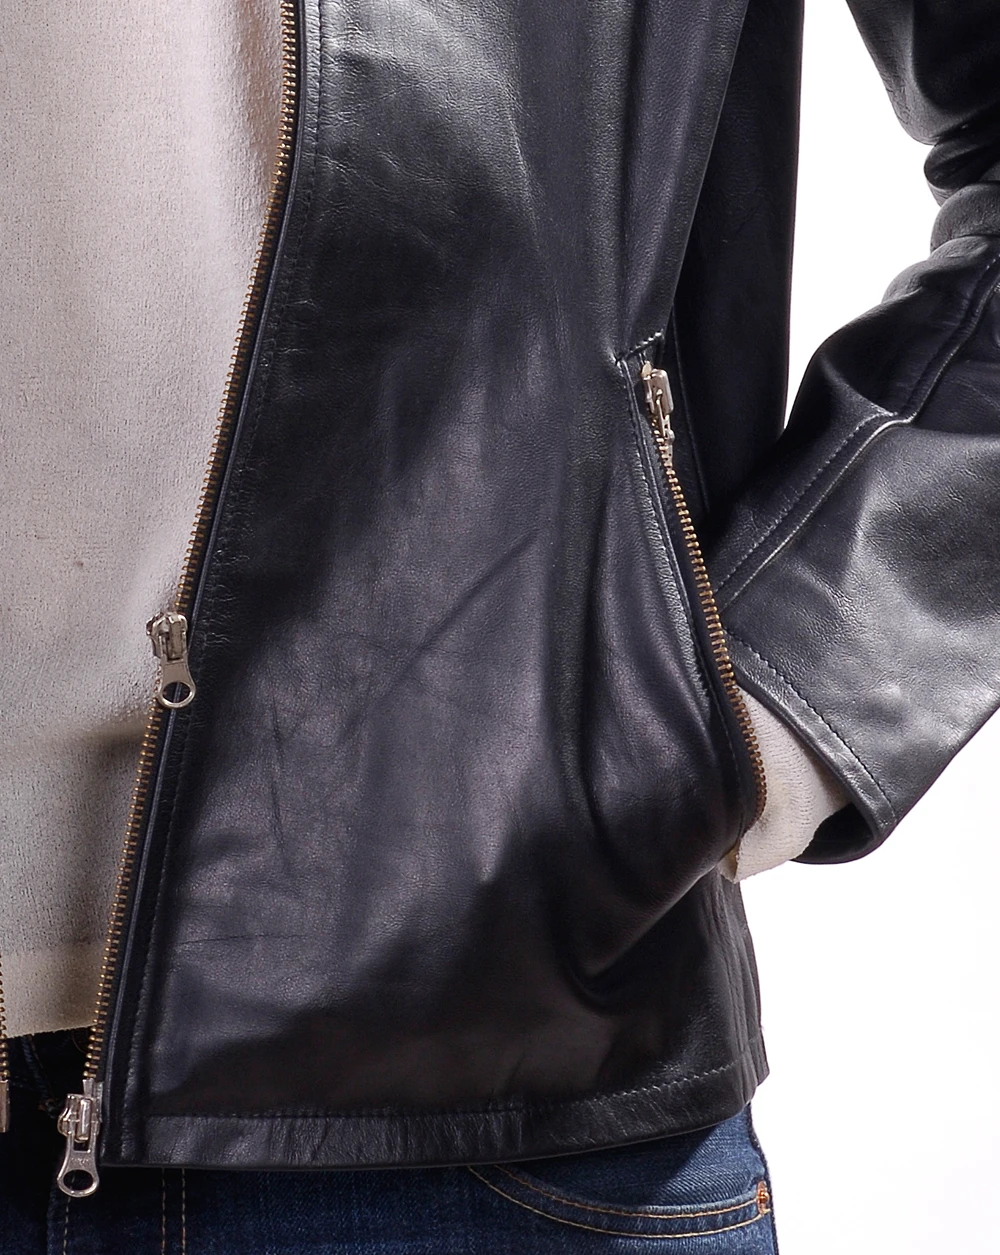 Zip-through Leather Jacket